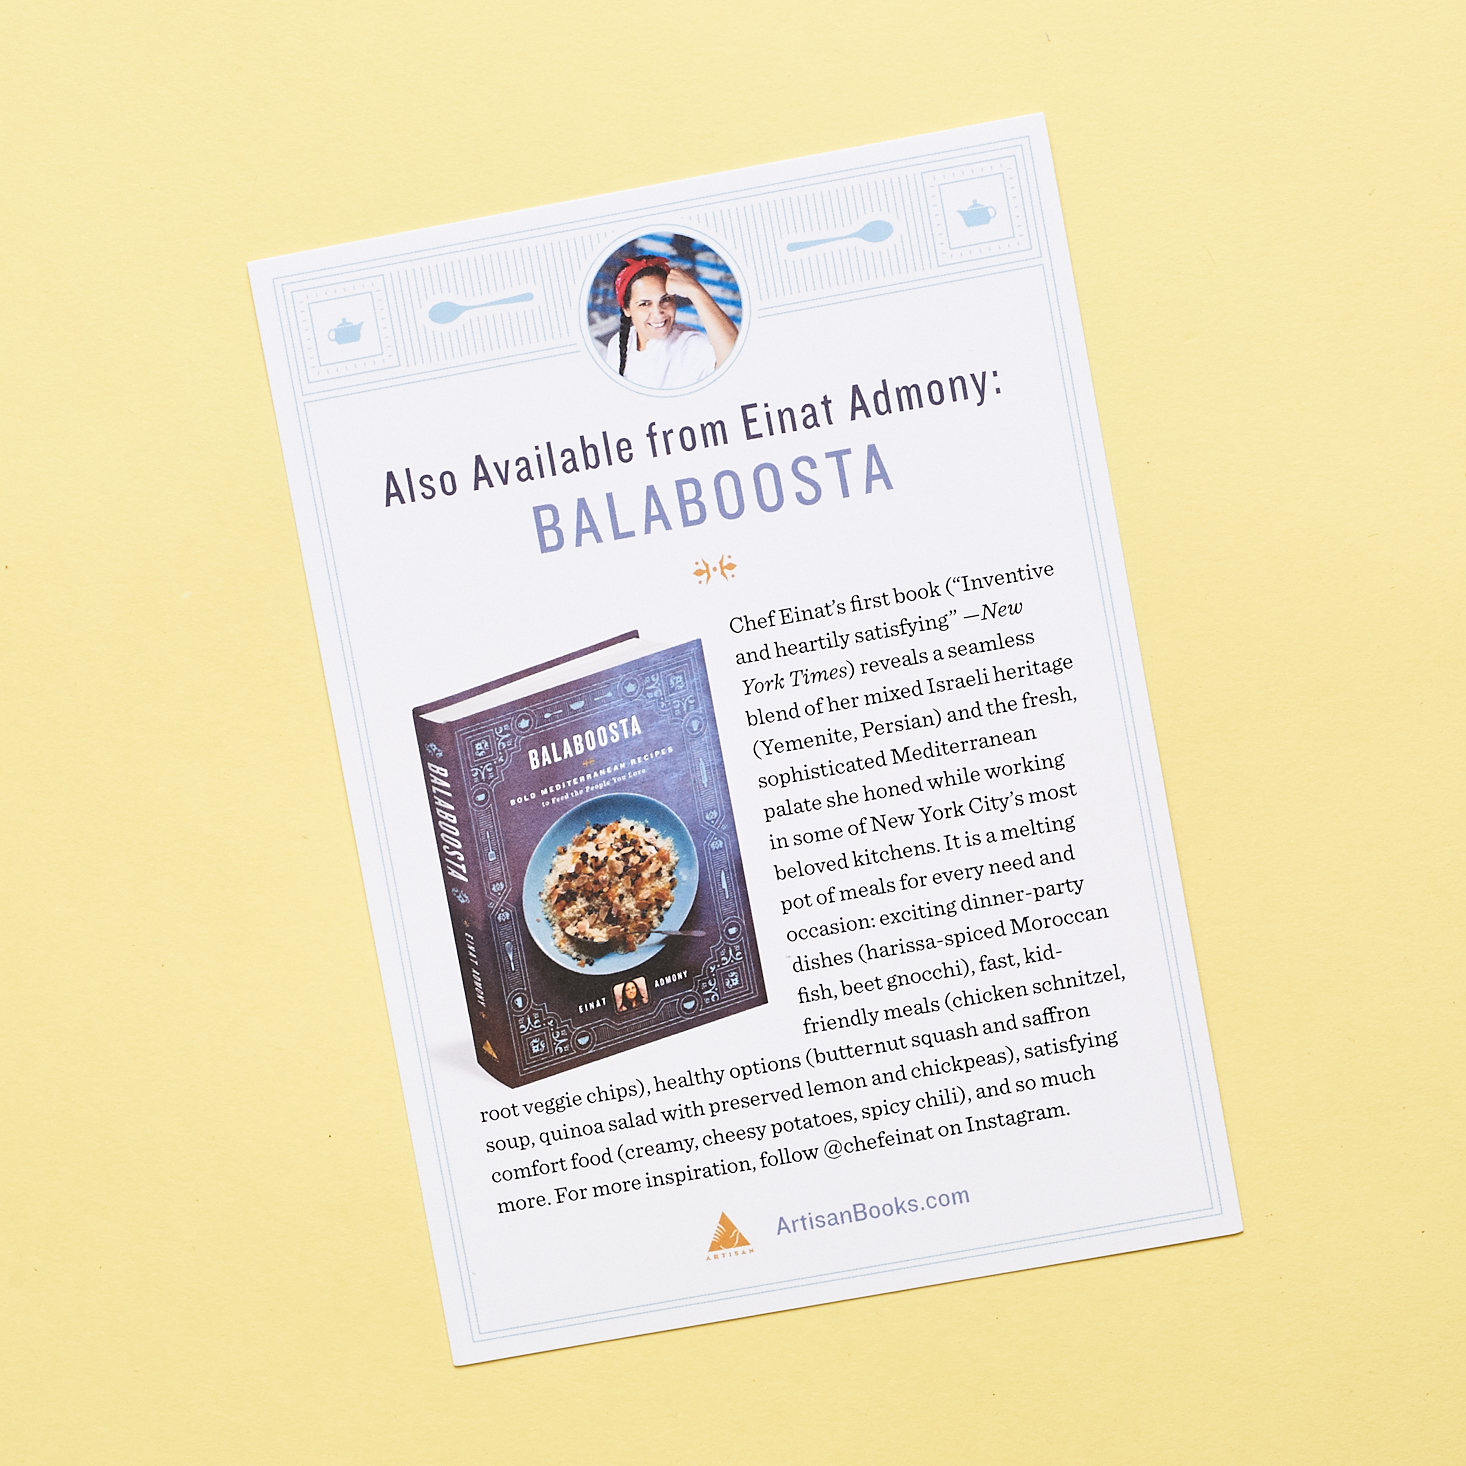 Info card for another Einat Admony cookbook, Balaboosta